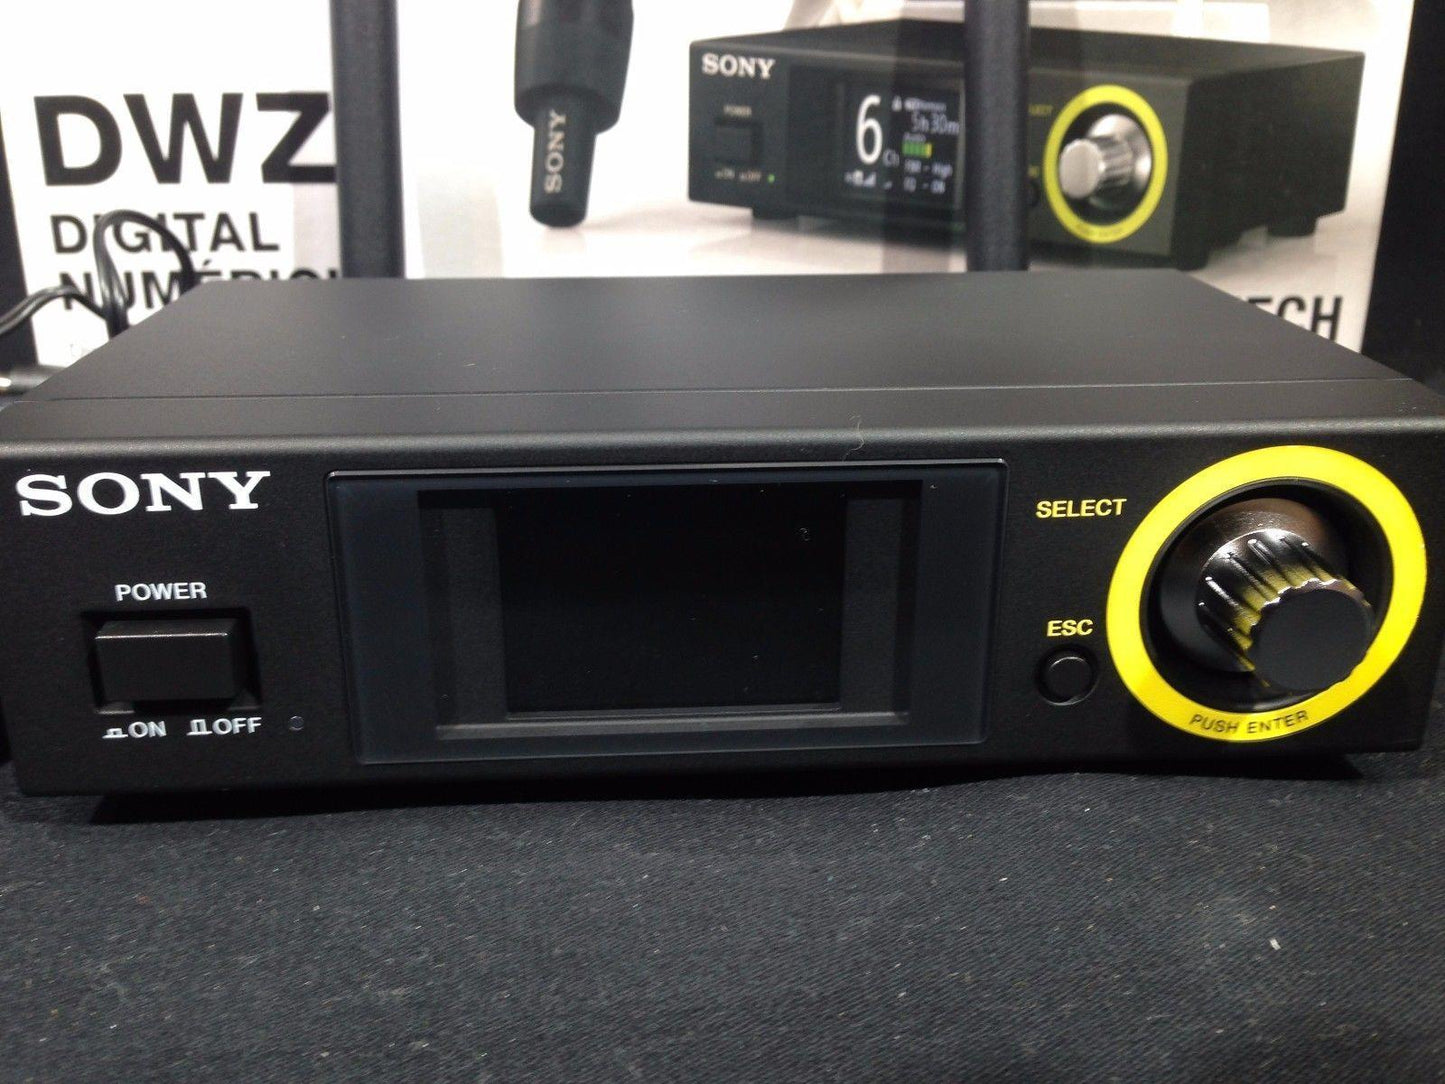 Sony DWZ-M70 Digital Handheld Wireless Microphone System MORE FEATURES > DWZM50